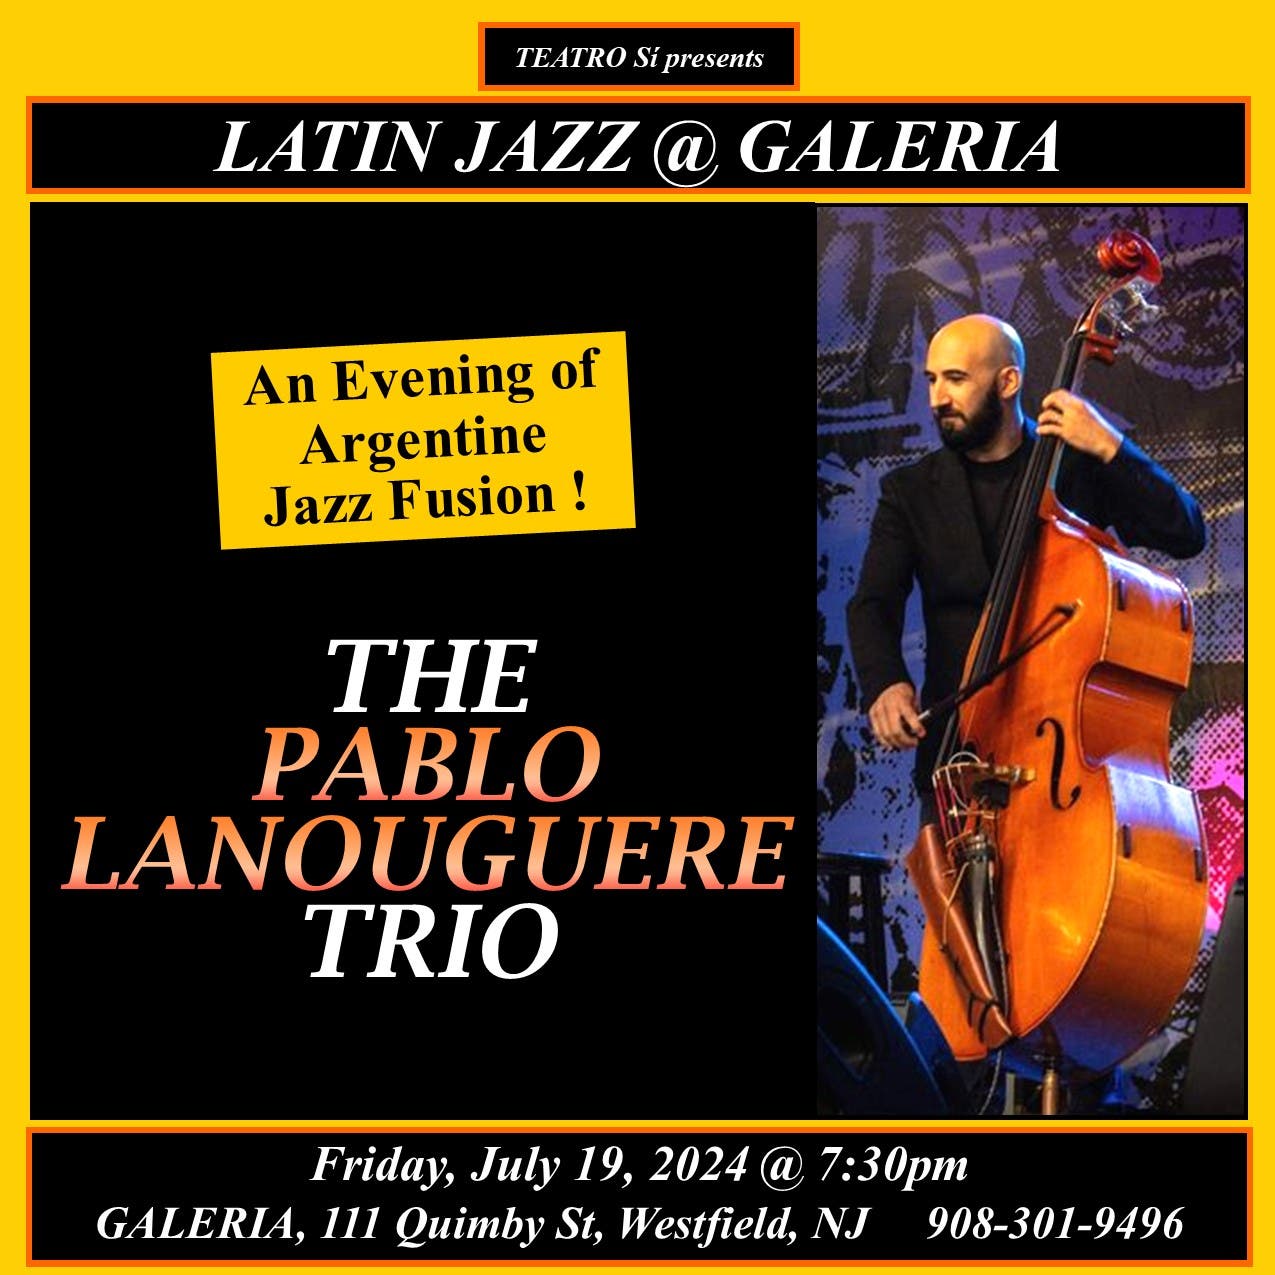 LATIN JAZZ @ GALERIA concert with The Pablo Lanouguere Trio